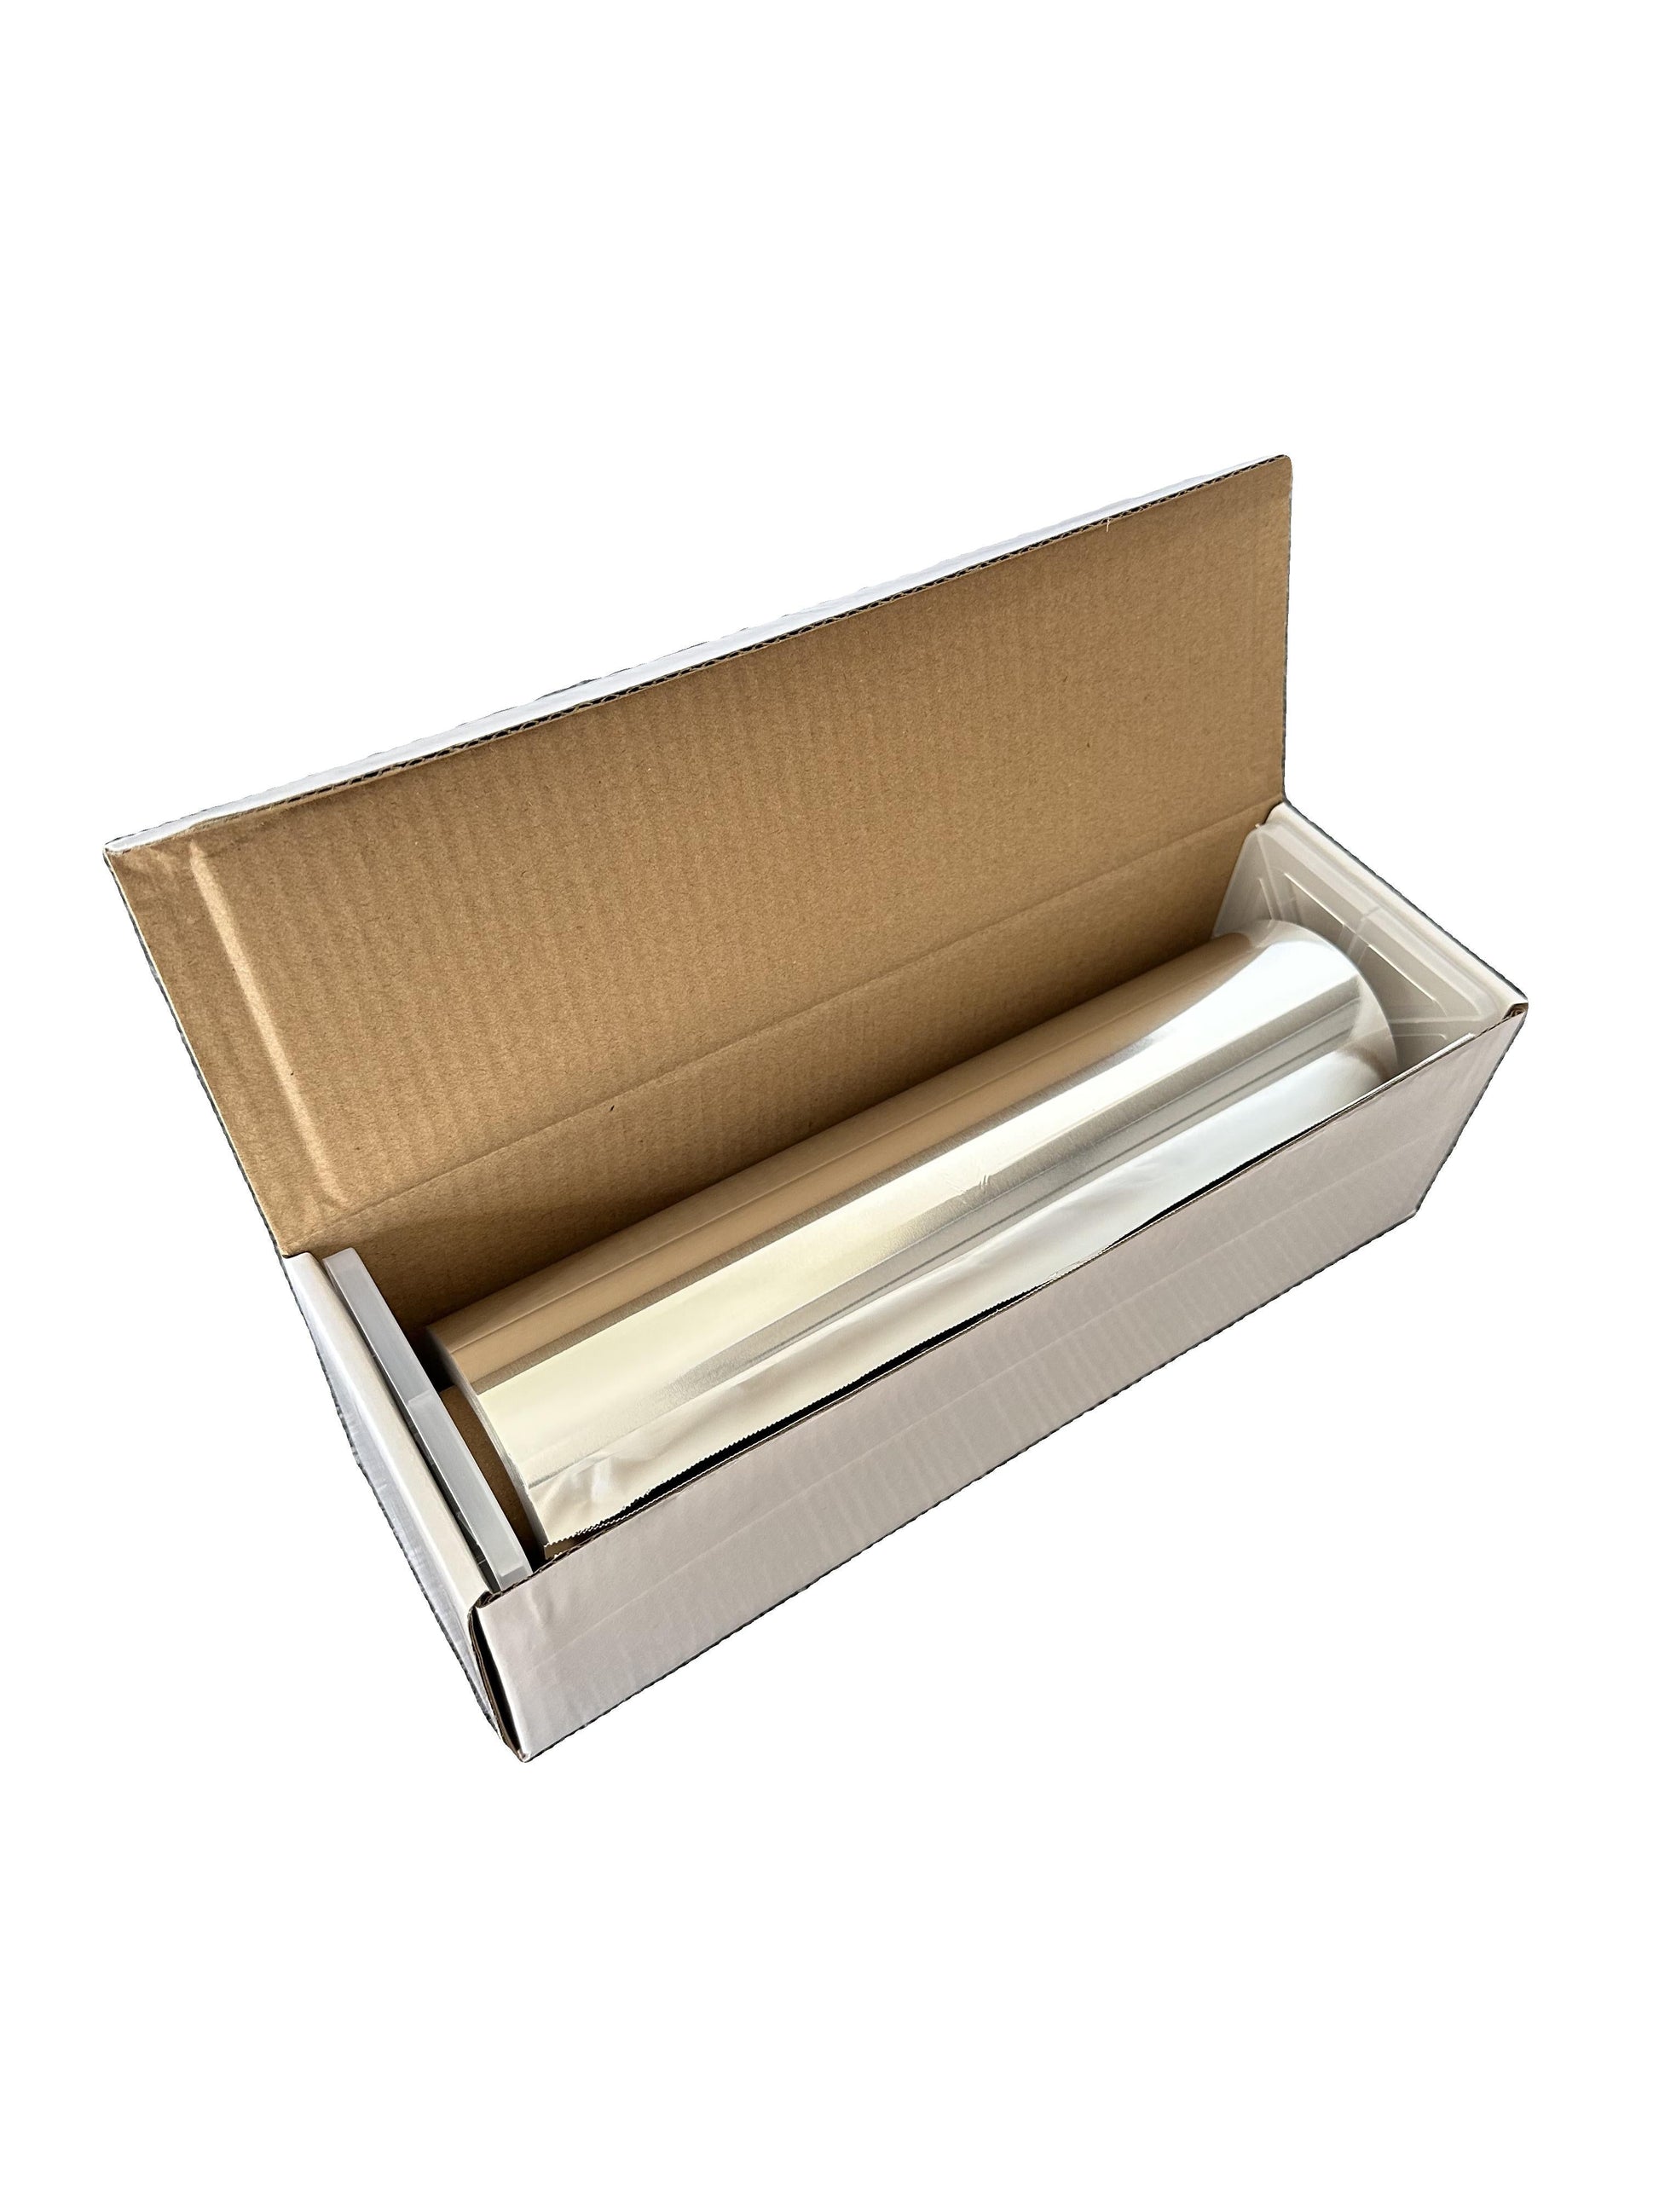 Generic 12 x 1000' Standard Aluminum Foil (1 Roll)